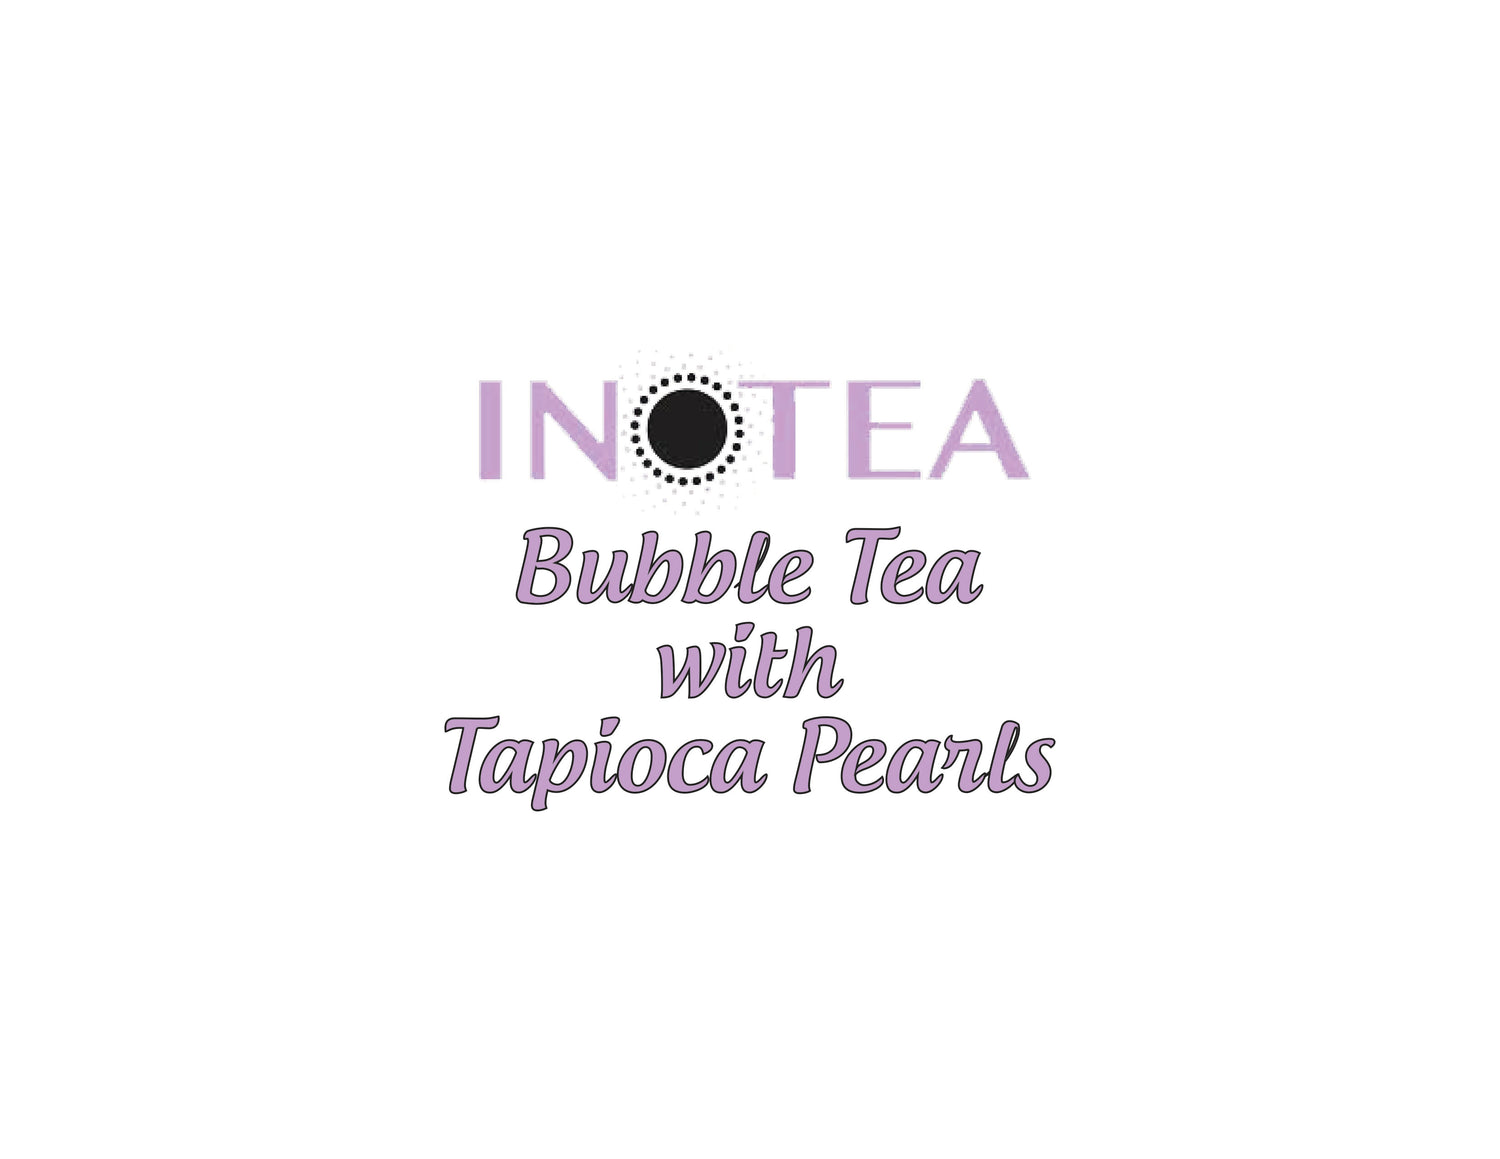 INOTEA BUBBLE TEA